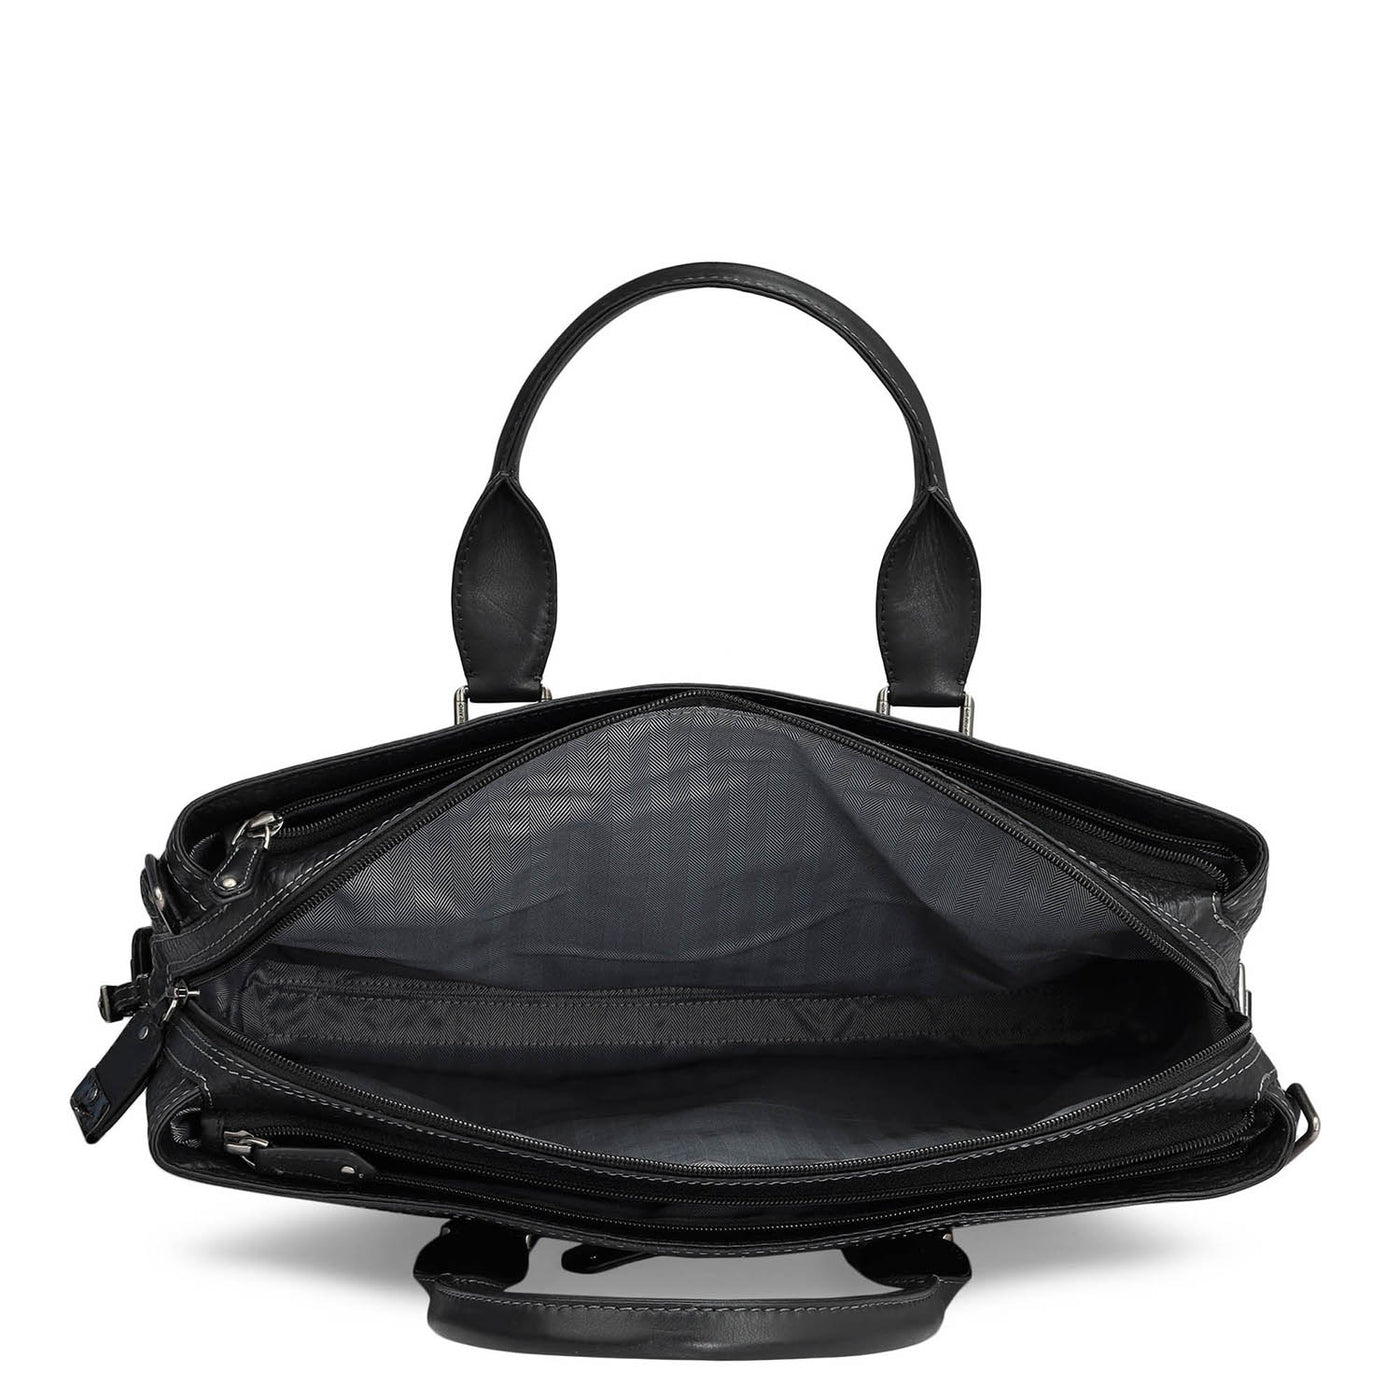 Black Bub Leather Laptop Bag - Upto 15"